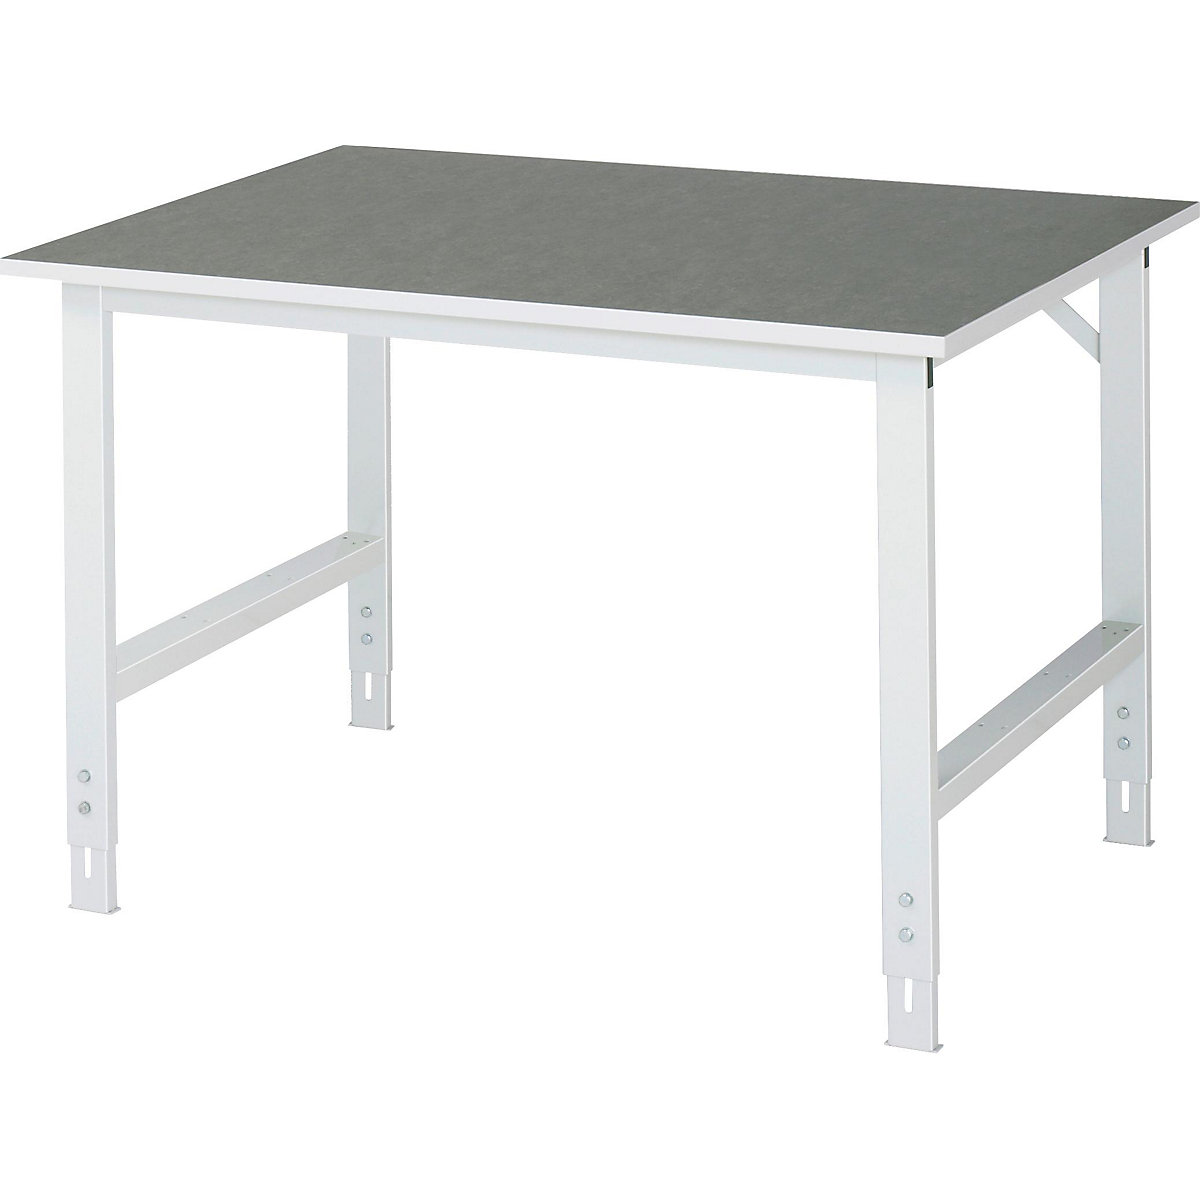 Werktafel, in hoogte verstelbaar – RAU, 760 – 1080 mm, linoleum blad, b x d = 1250 x 1000 mm, lichtgrijs-7